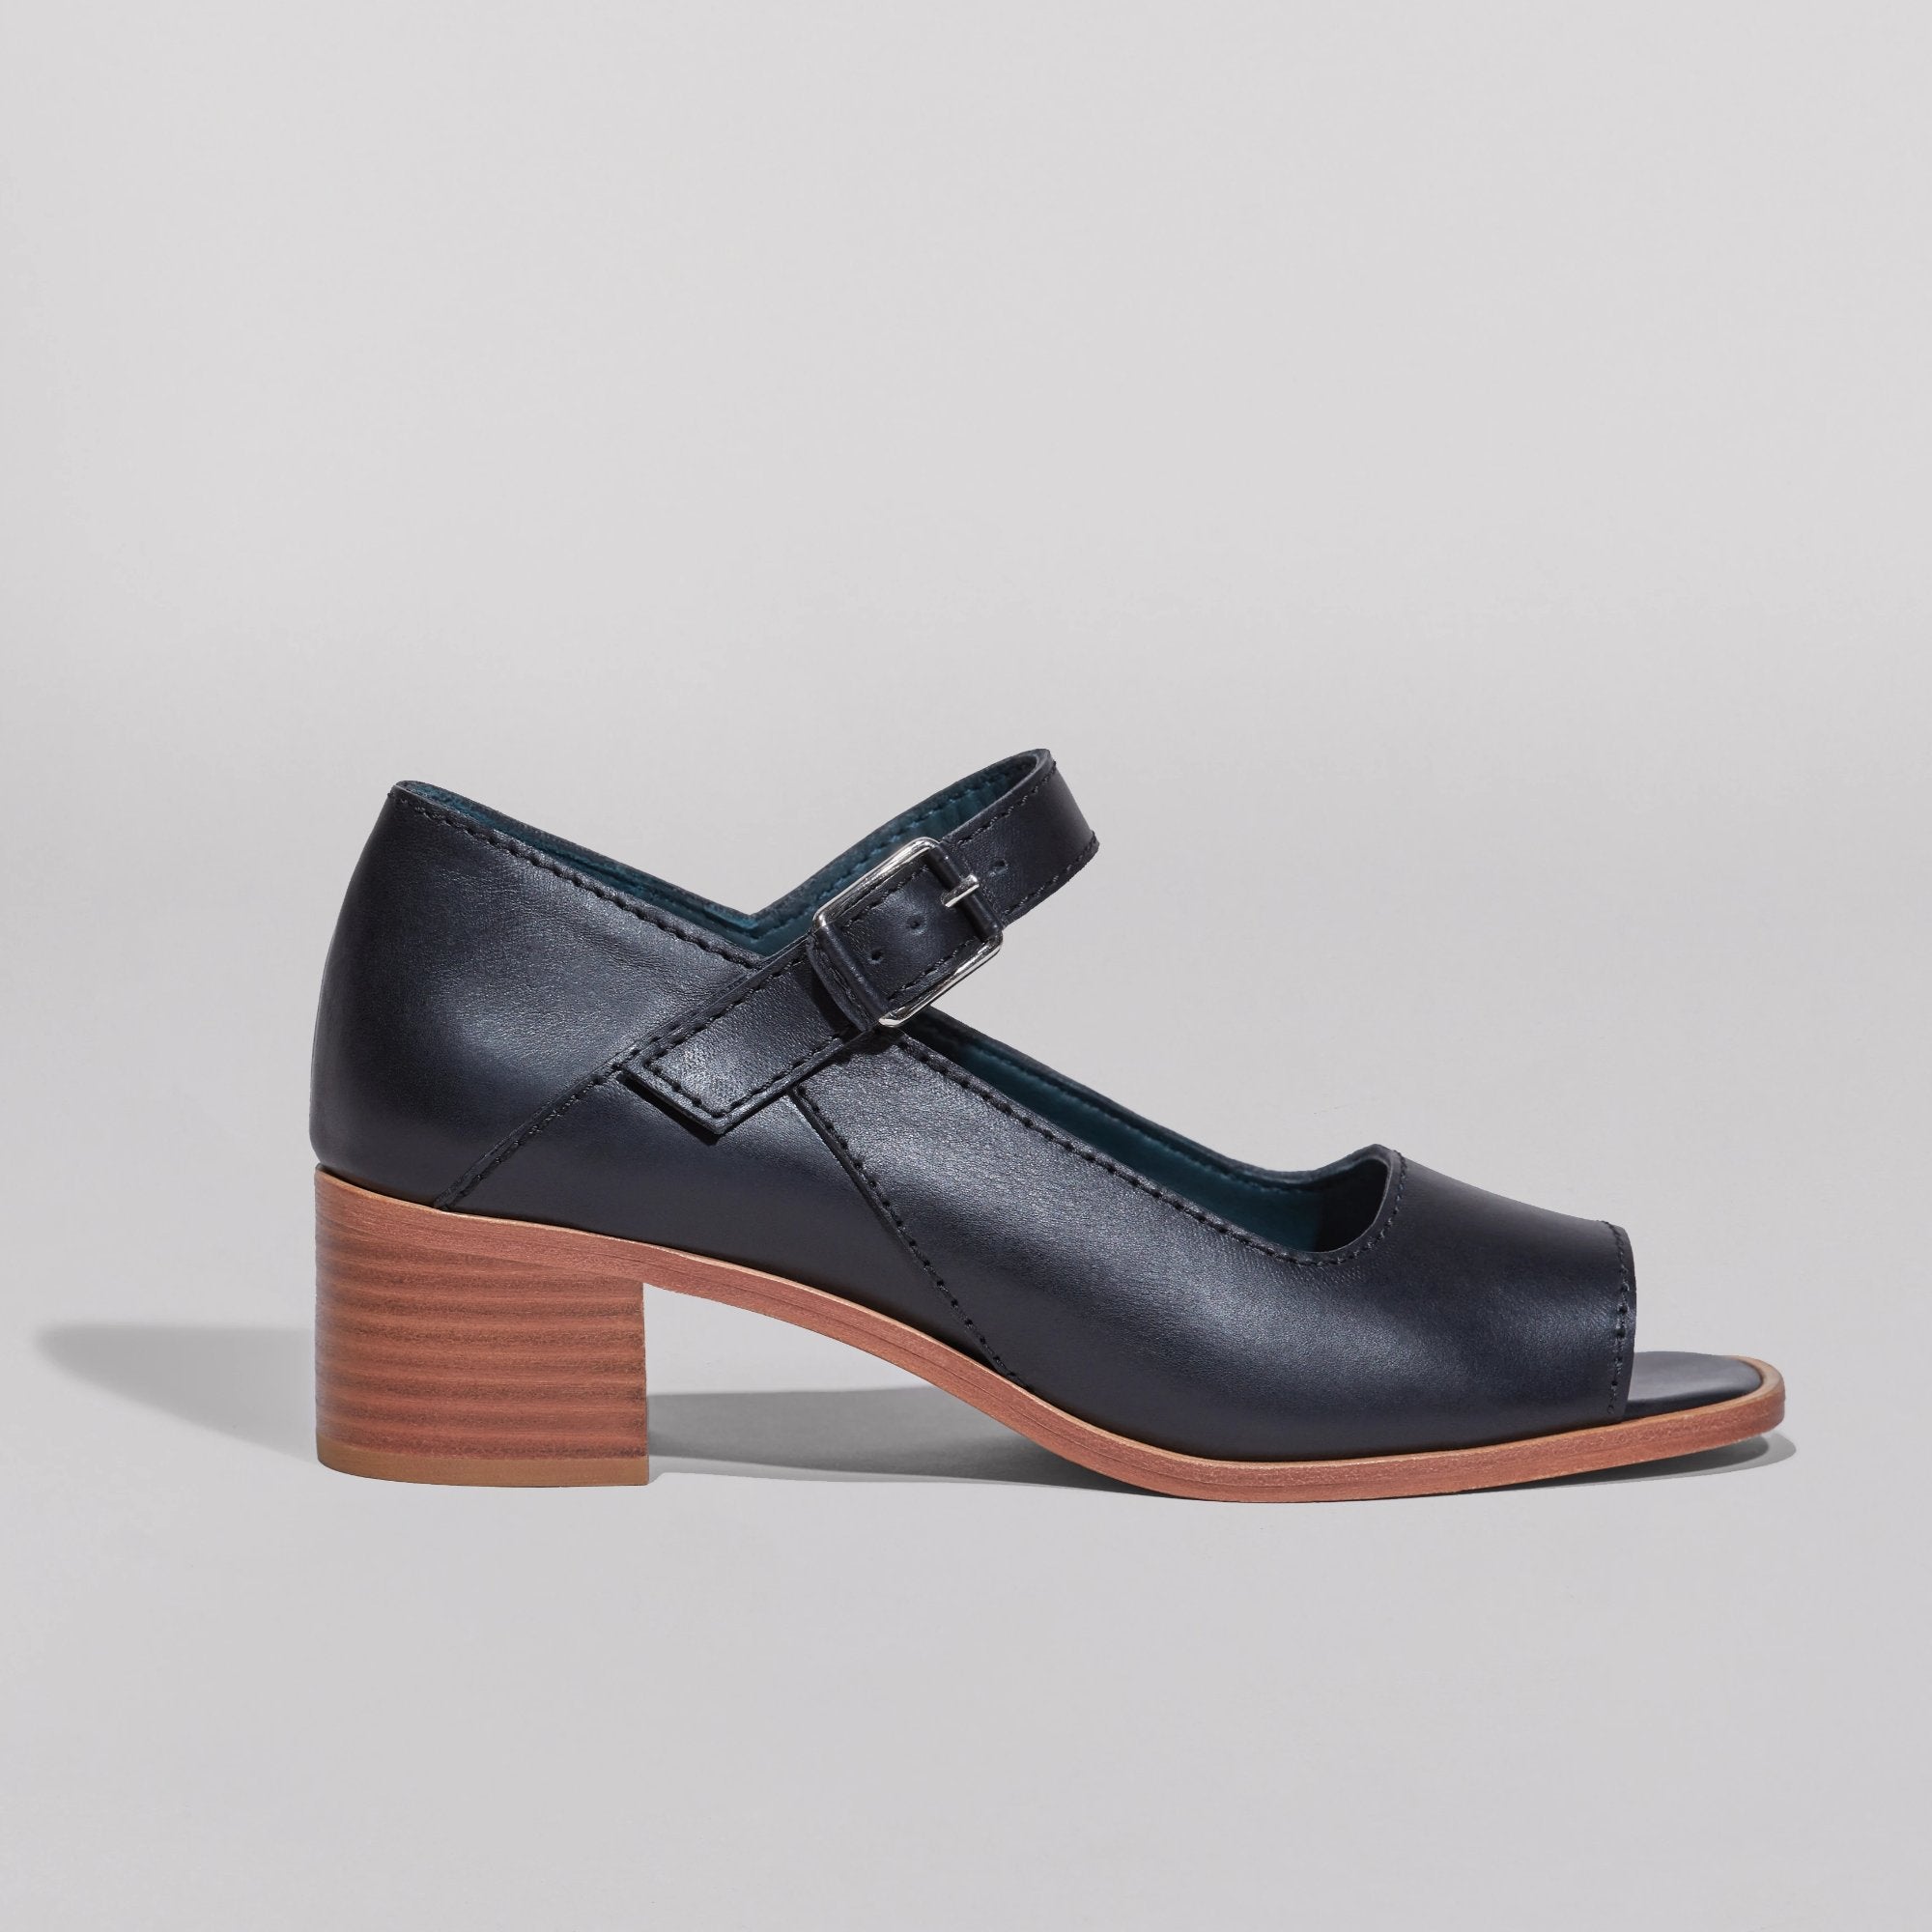 Wilder shoes - black leather open-toe mary jane women's mid-heel sandal - Constance - wildershop.com